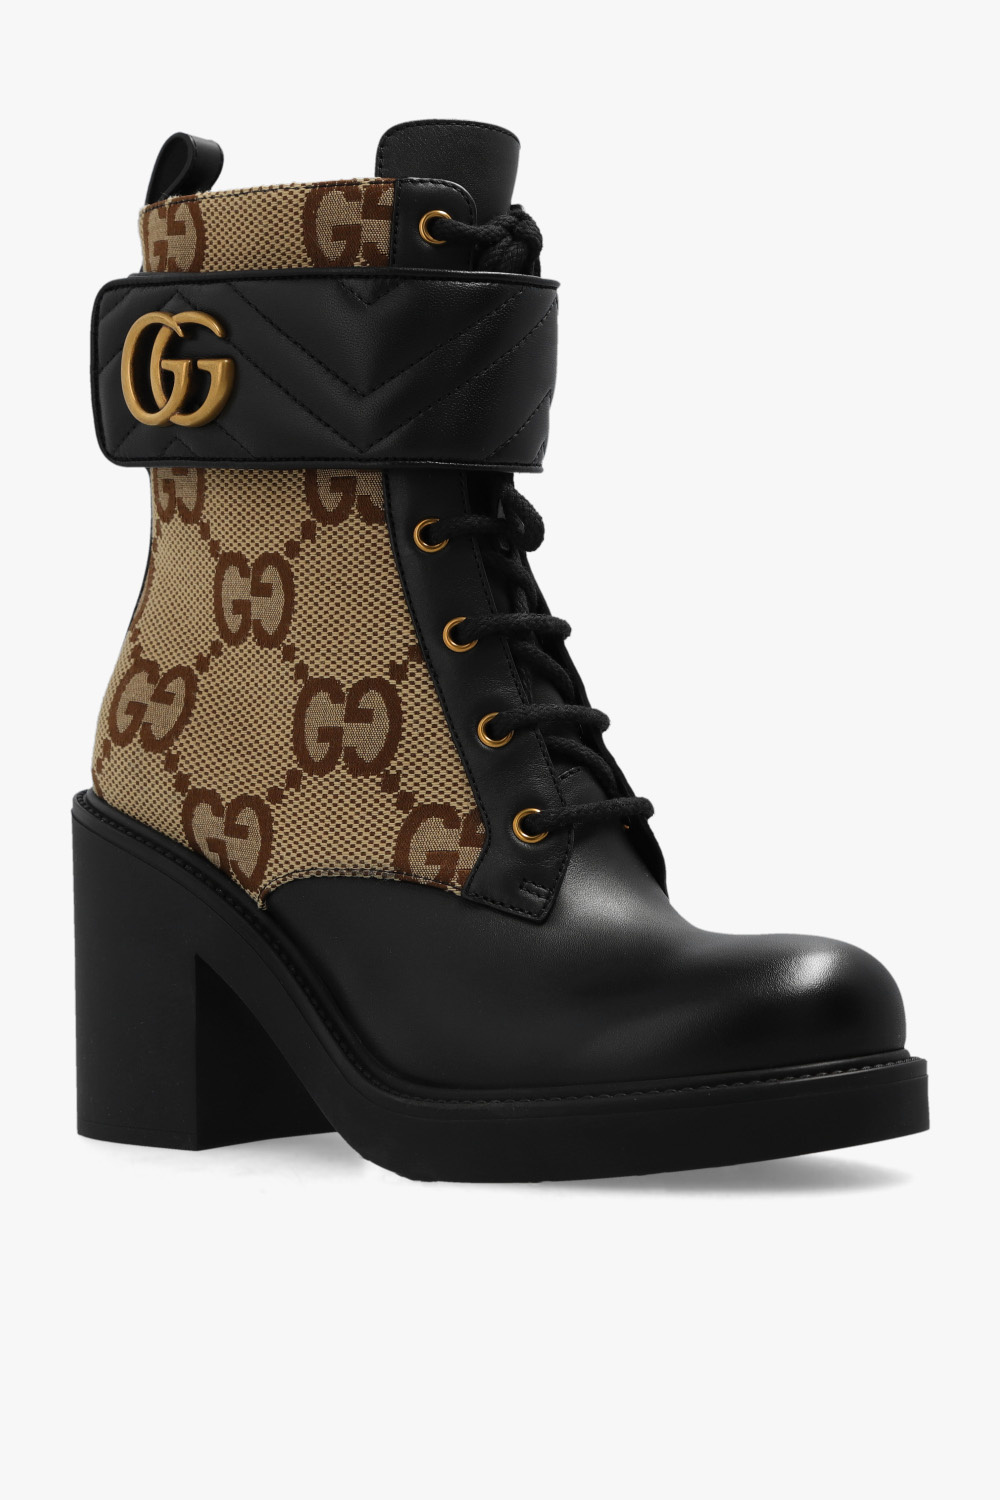 GUCCI WINTER BOOT SET  Gucci boots, Louis vuitton shoes heels